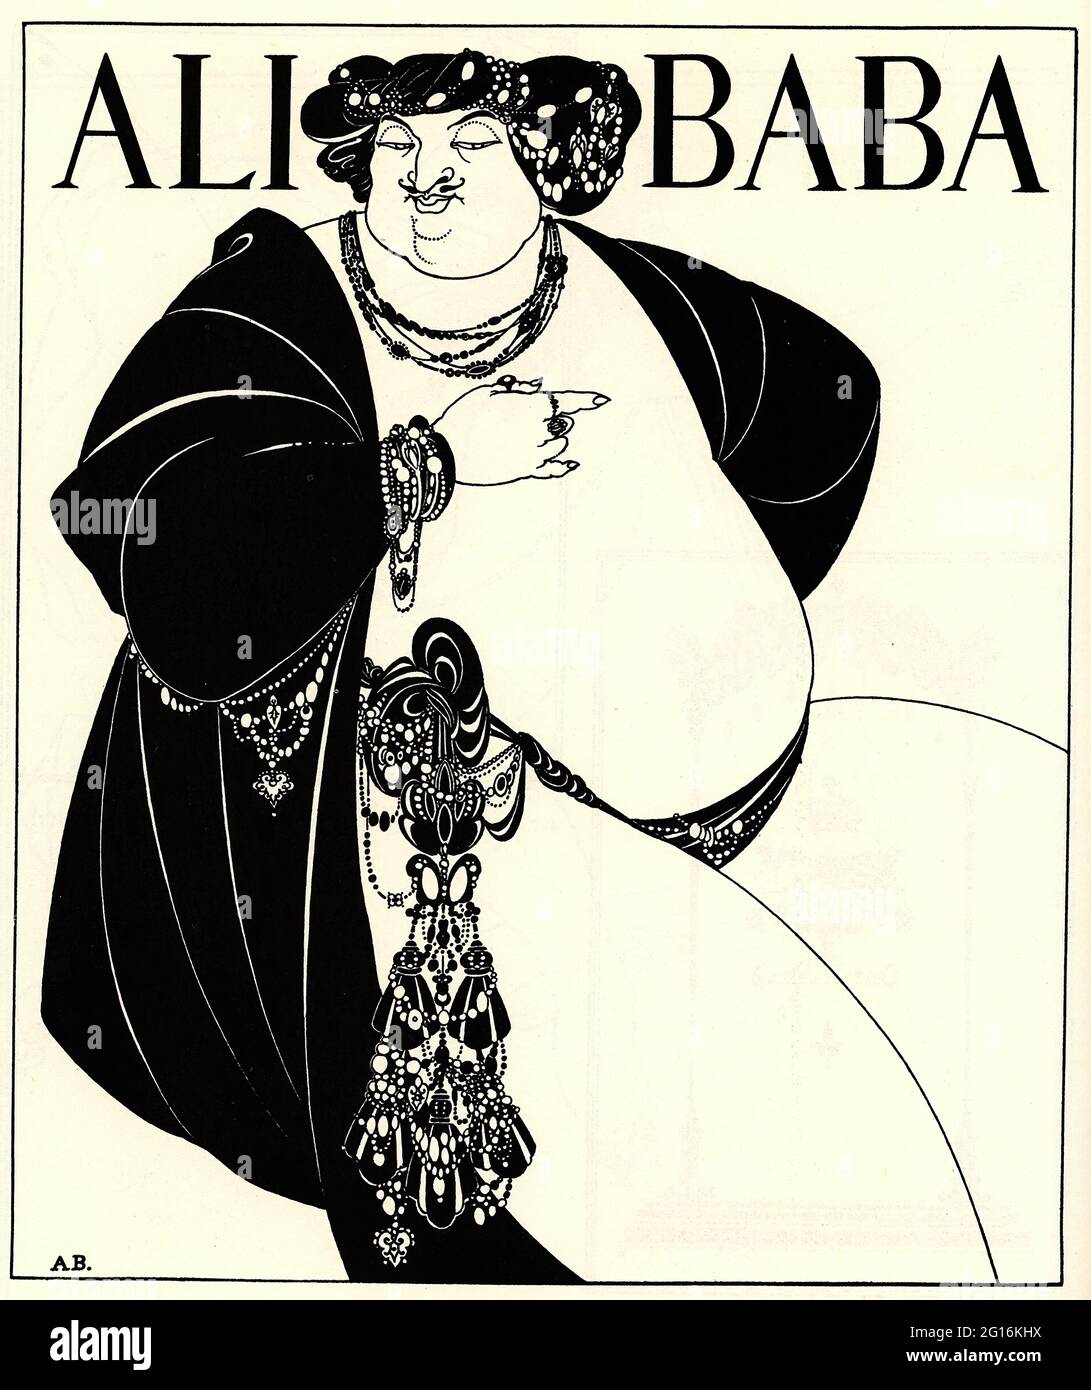 Vignette ex libris (ex-libris) by Aubrey Beardsley (1872-1898)